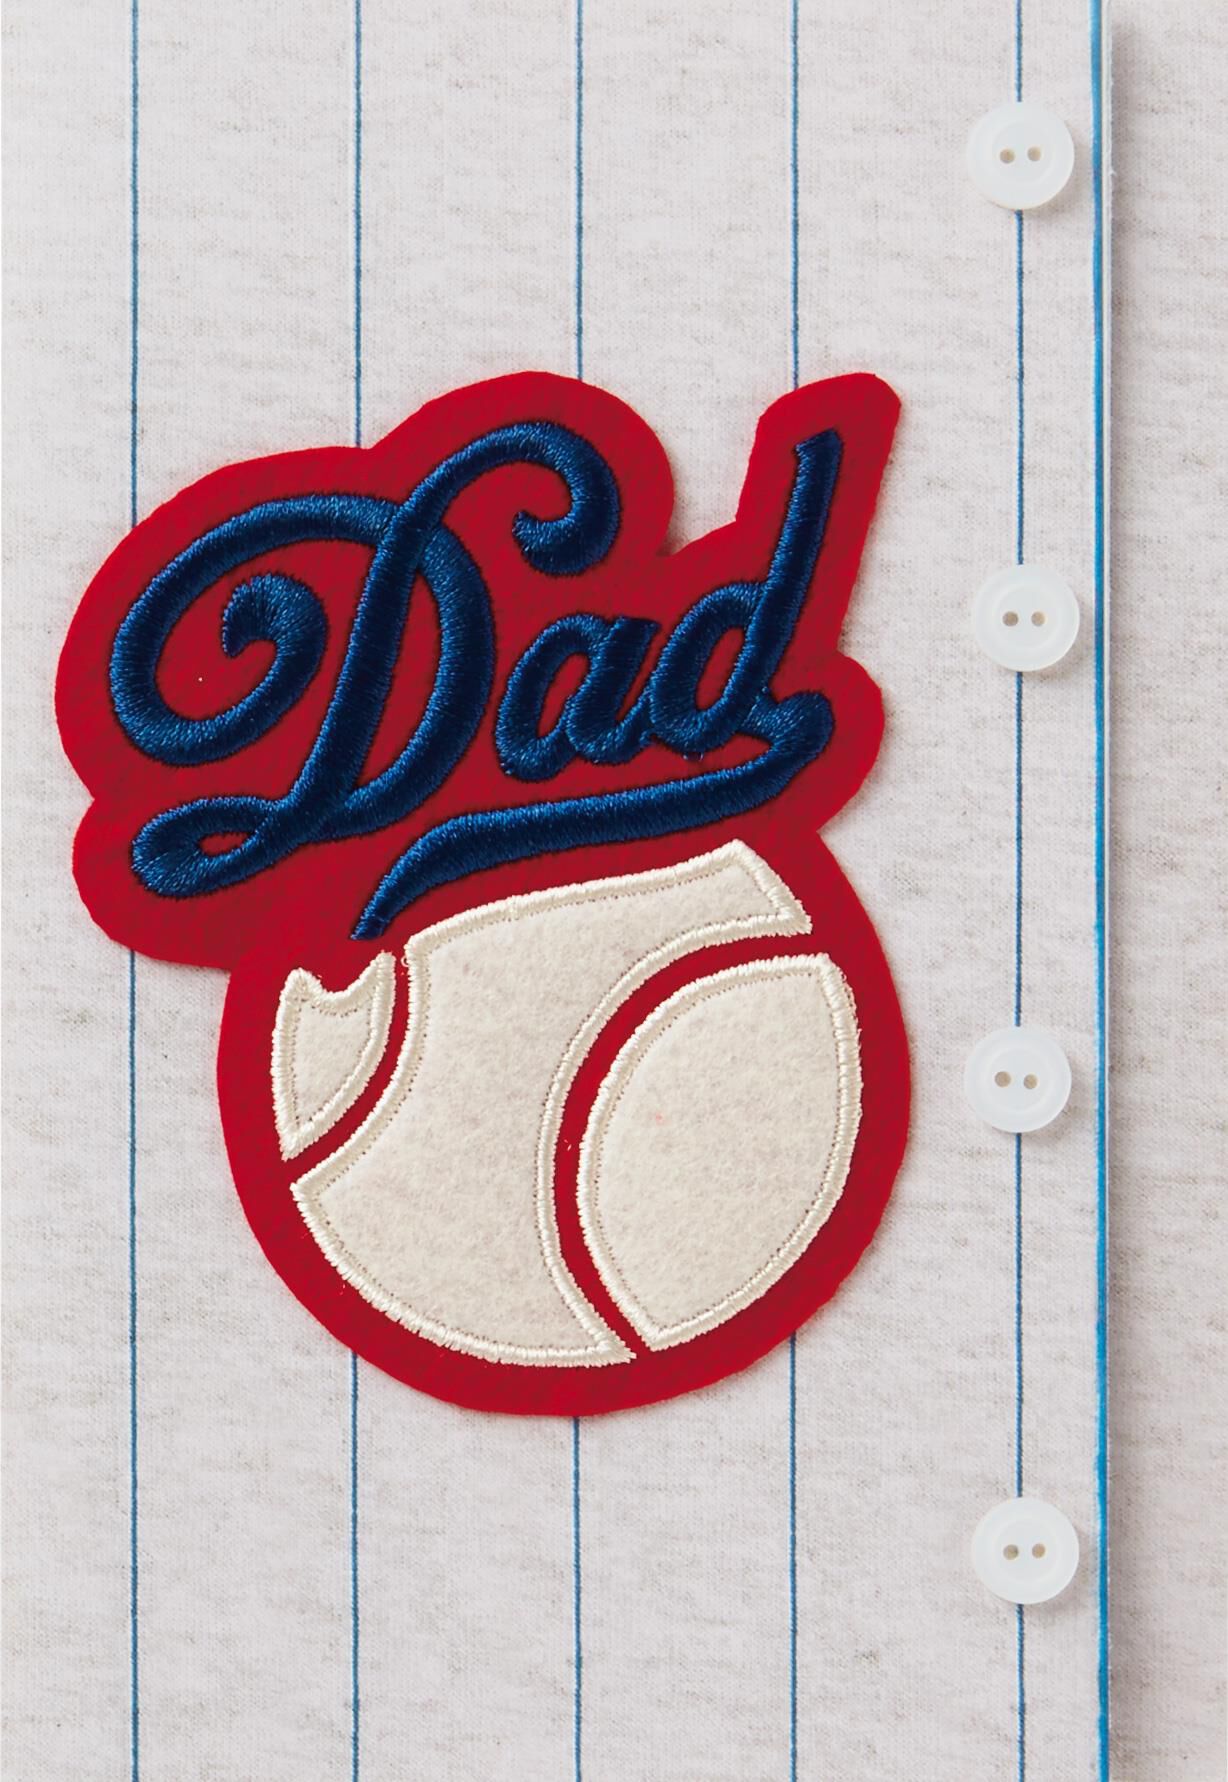 baseball-dad-father-s-day-card-greeting-cards-hallmark